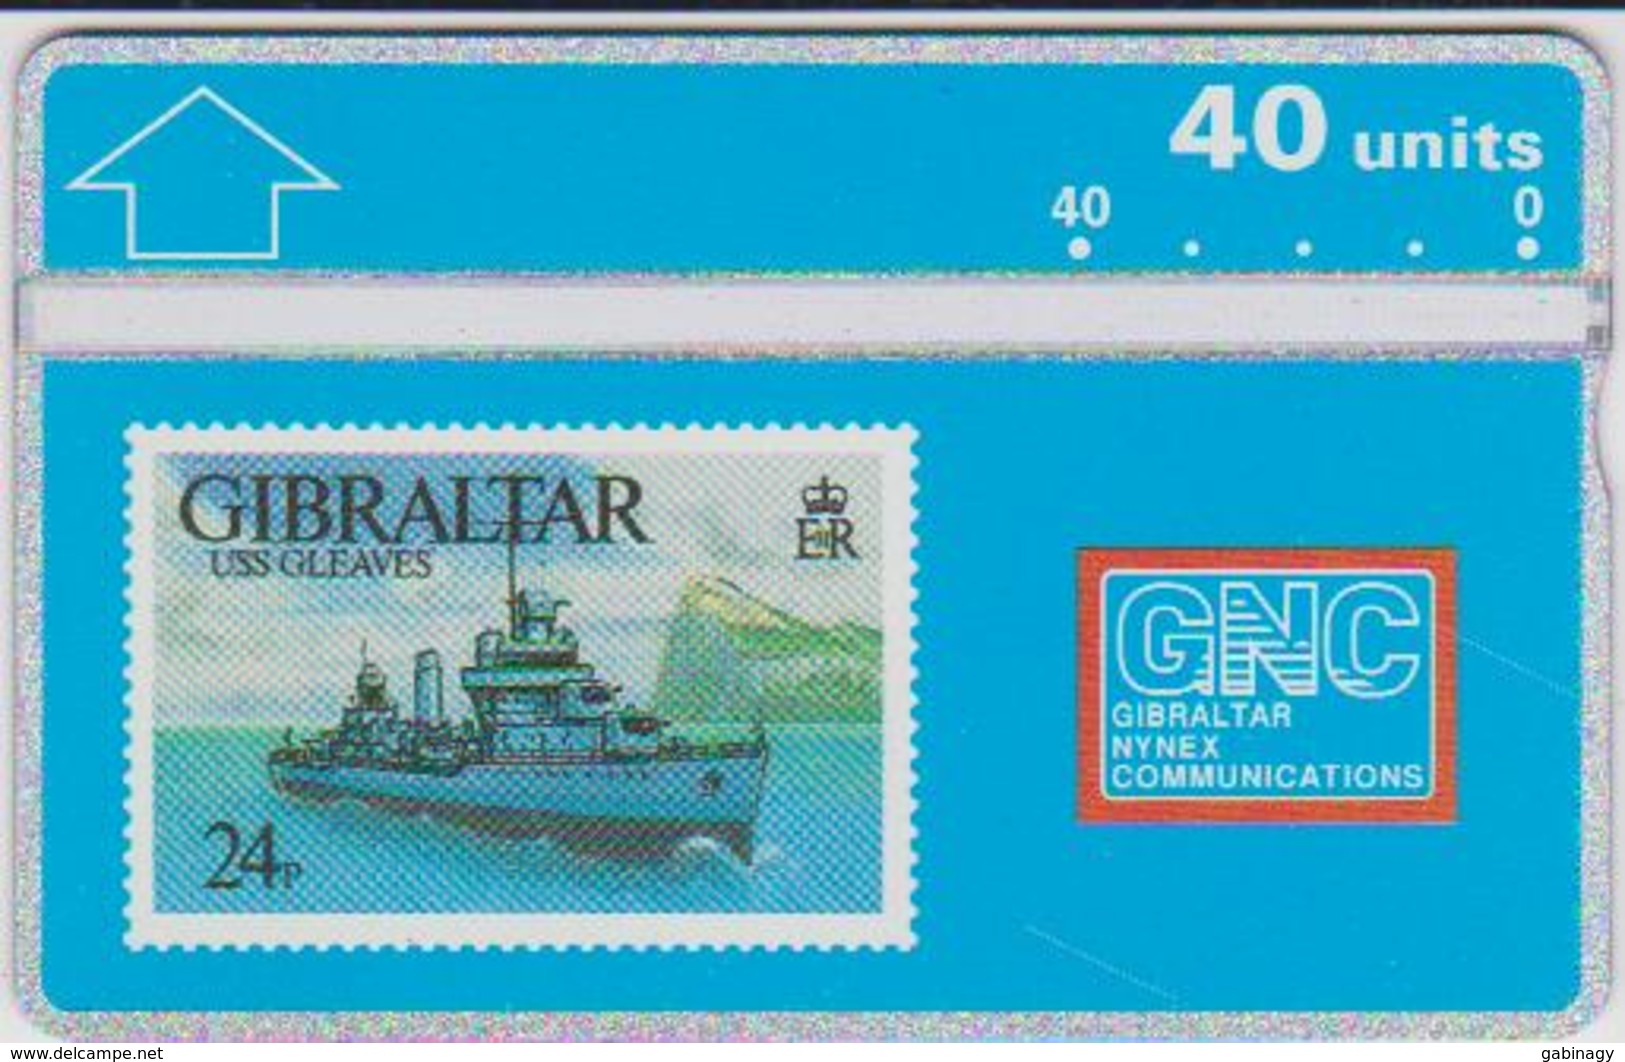 #03 - GIBRALTAR-06 - USS GLEAVES - STAMP - 306A - Gibraltar